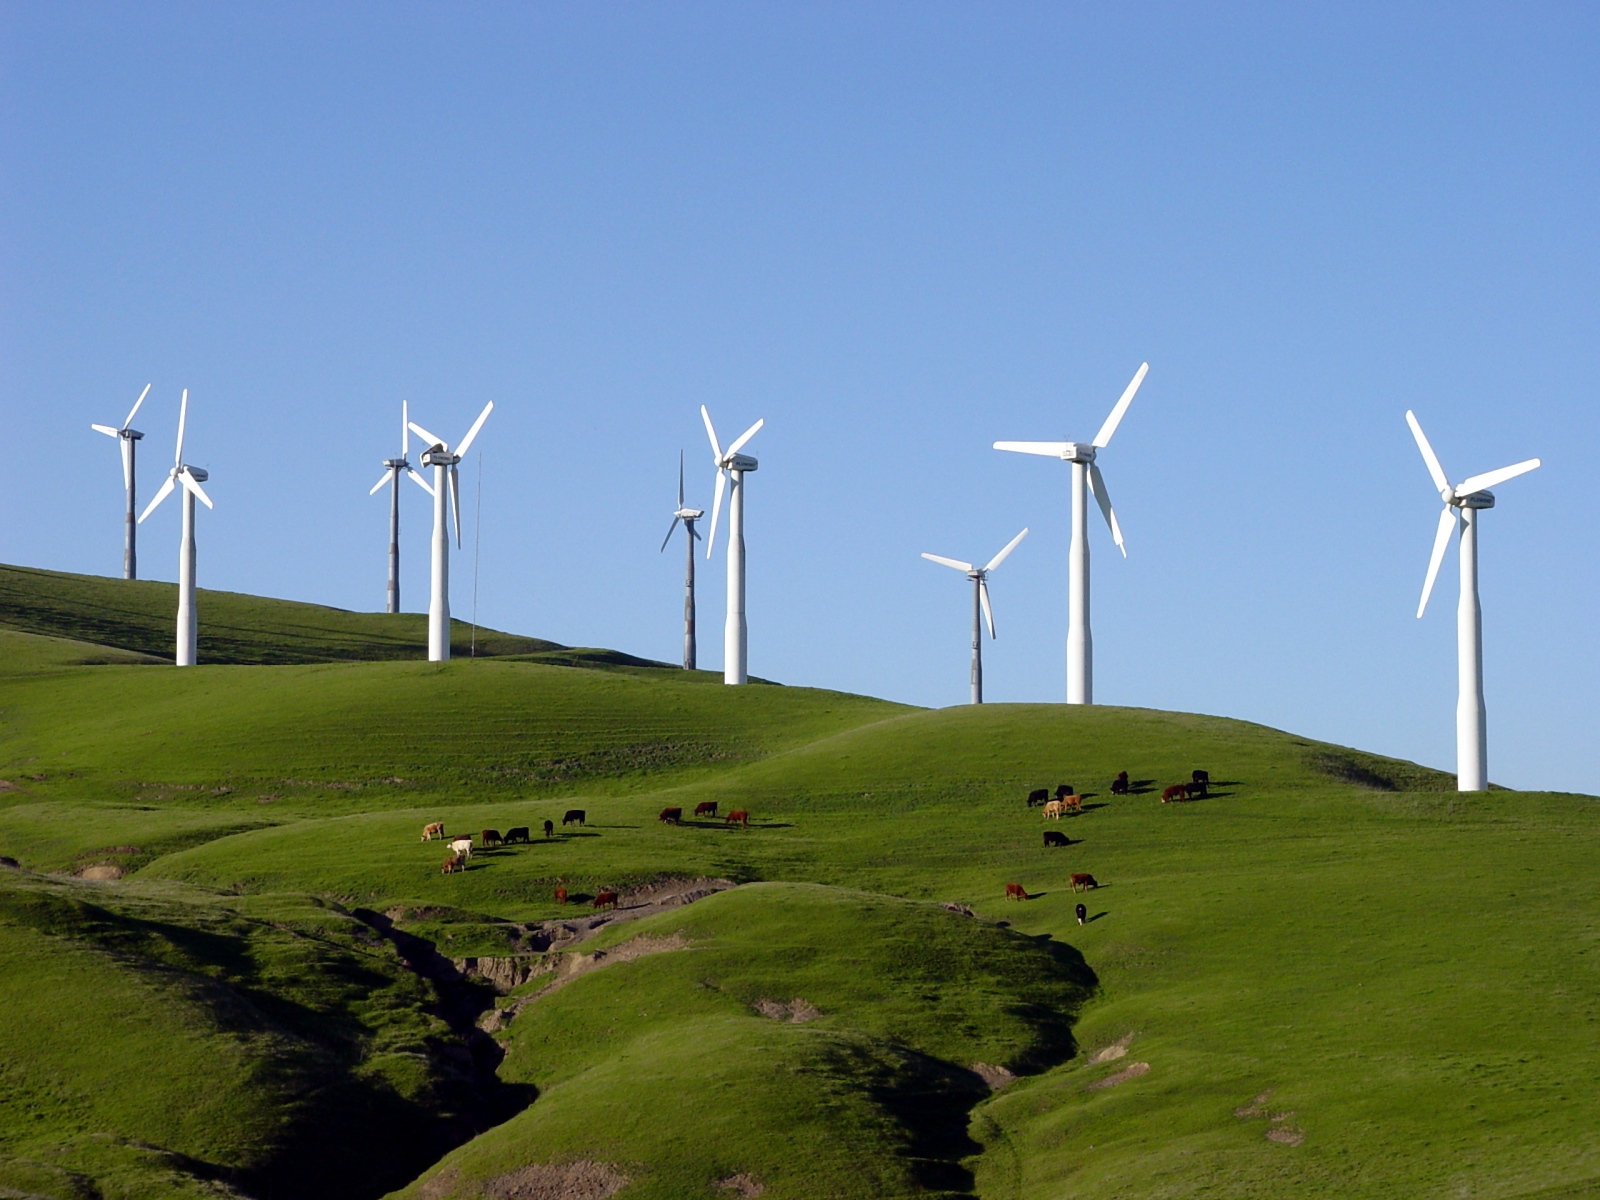 Windmills on hillside